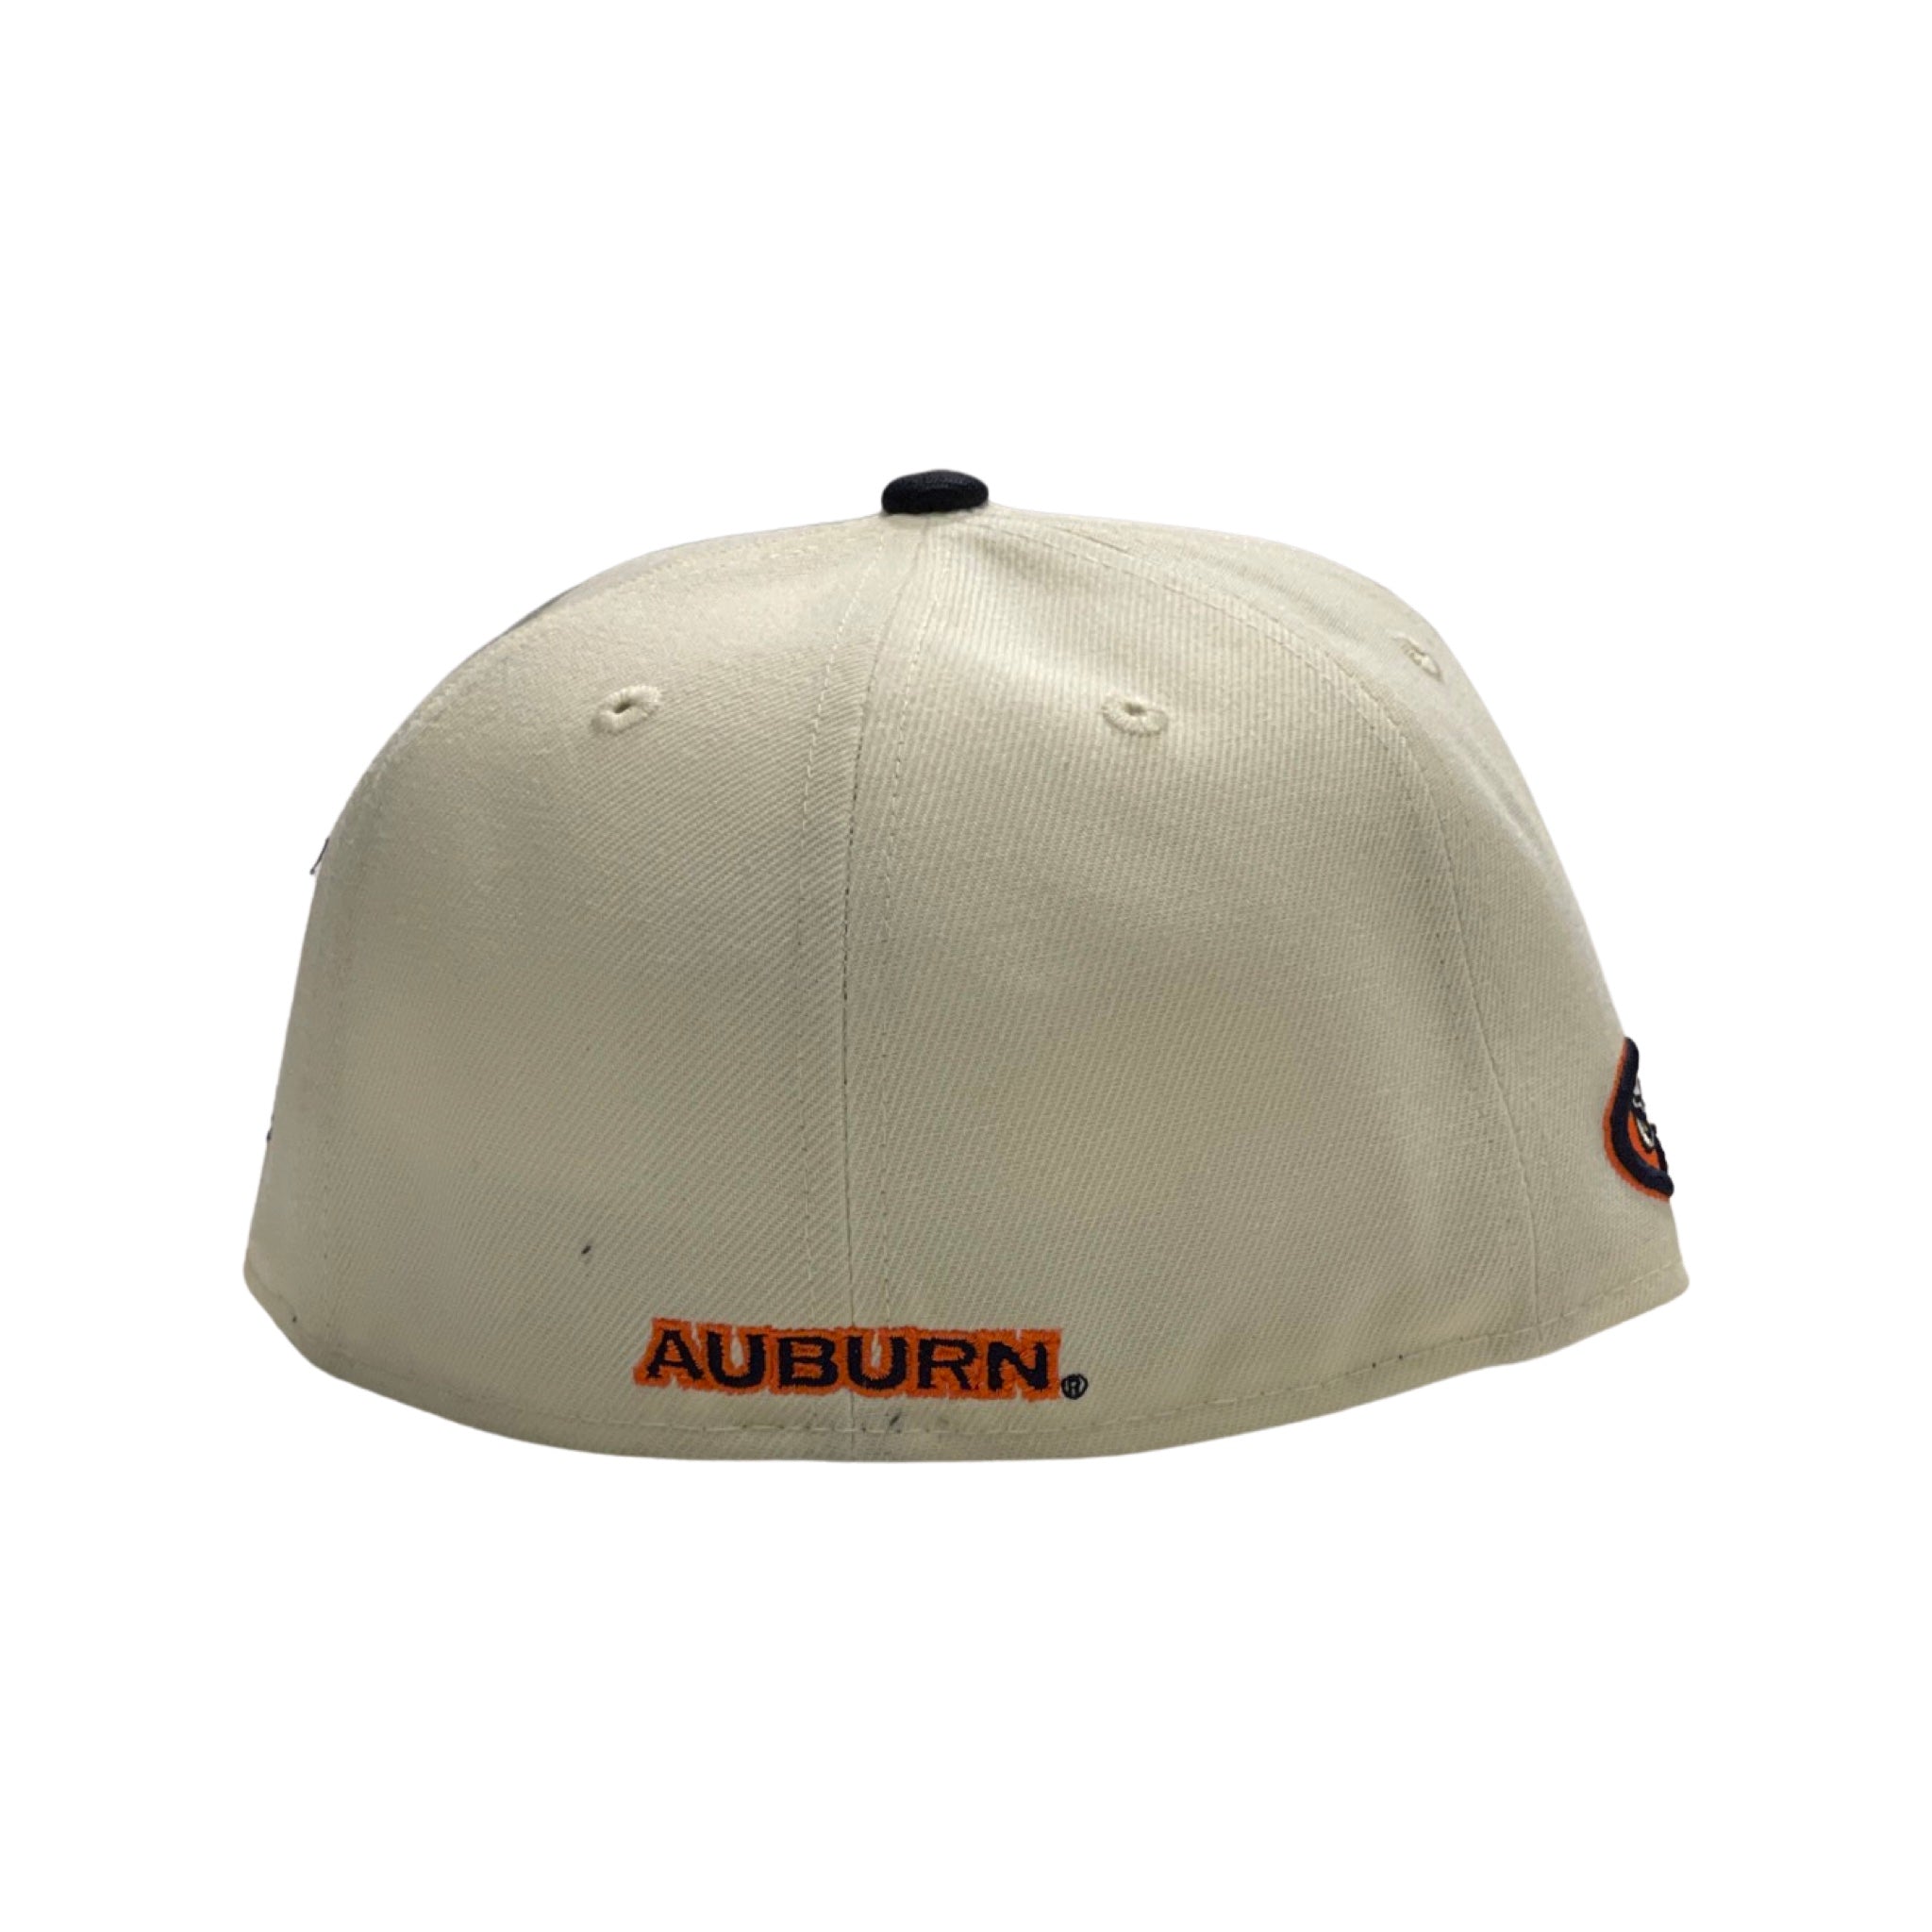 New Era Hat - Auburn Tigers - Cream / Navy